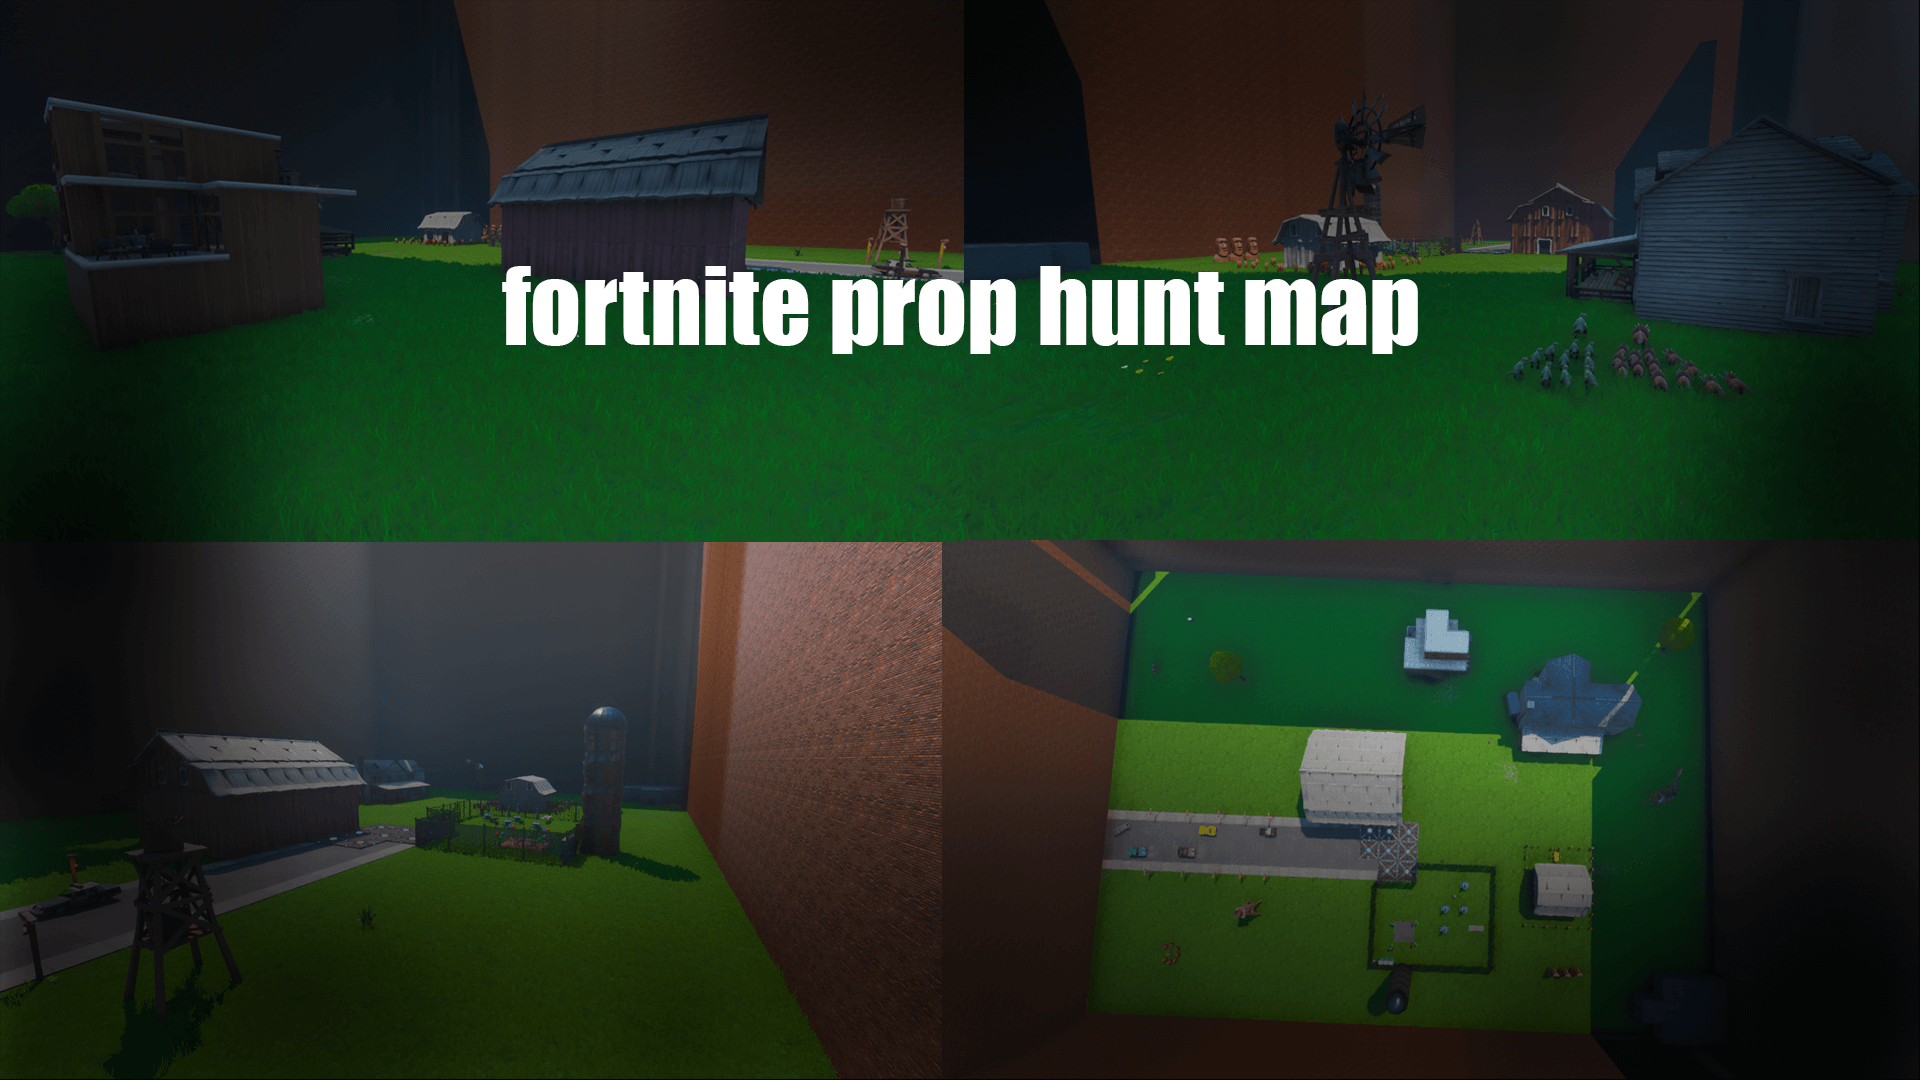 PROP HUNT MAP